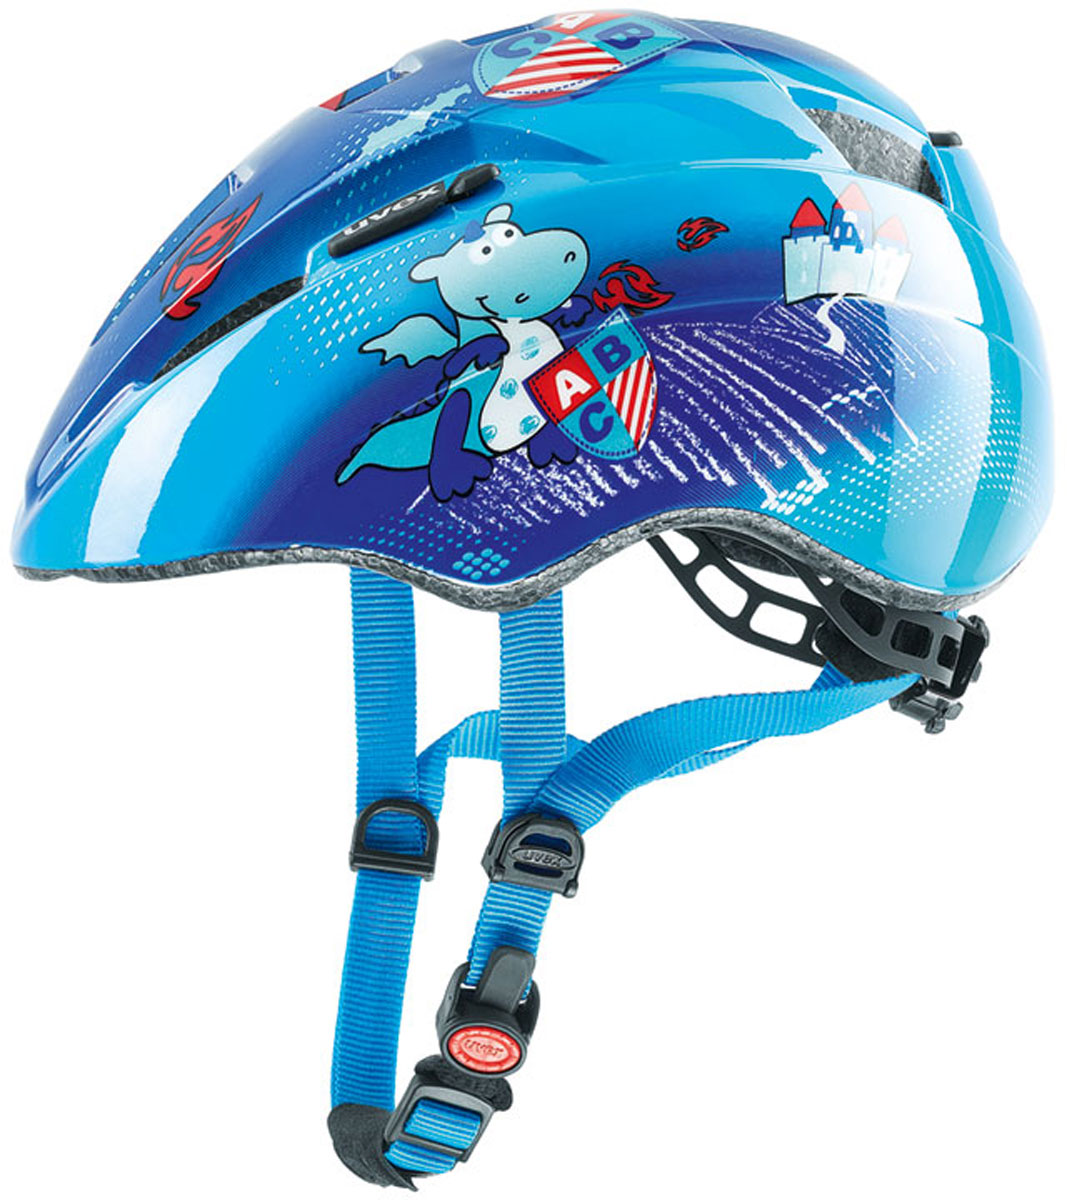 Kids’ cycling helmet